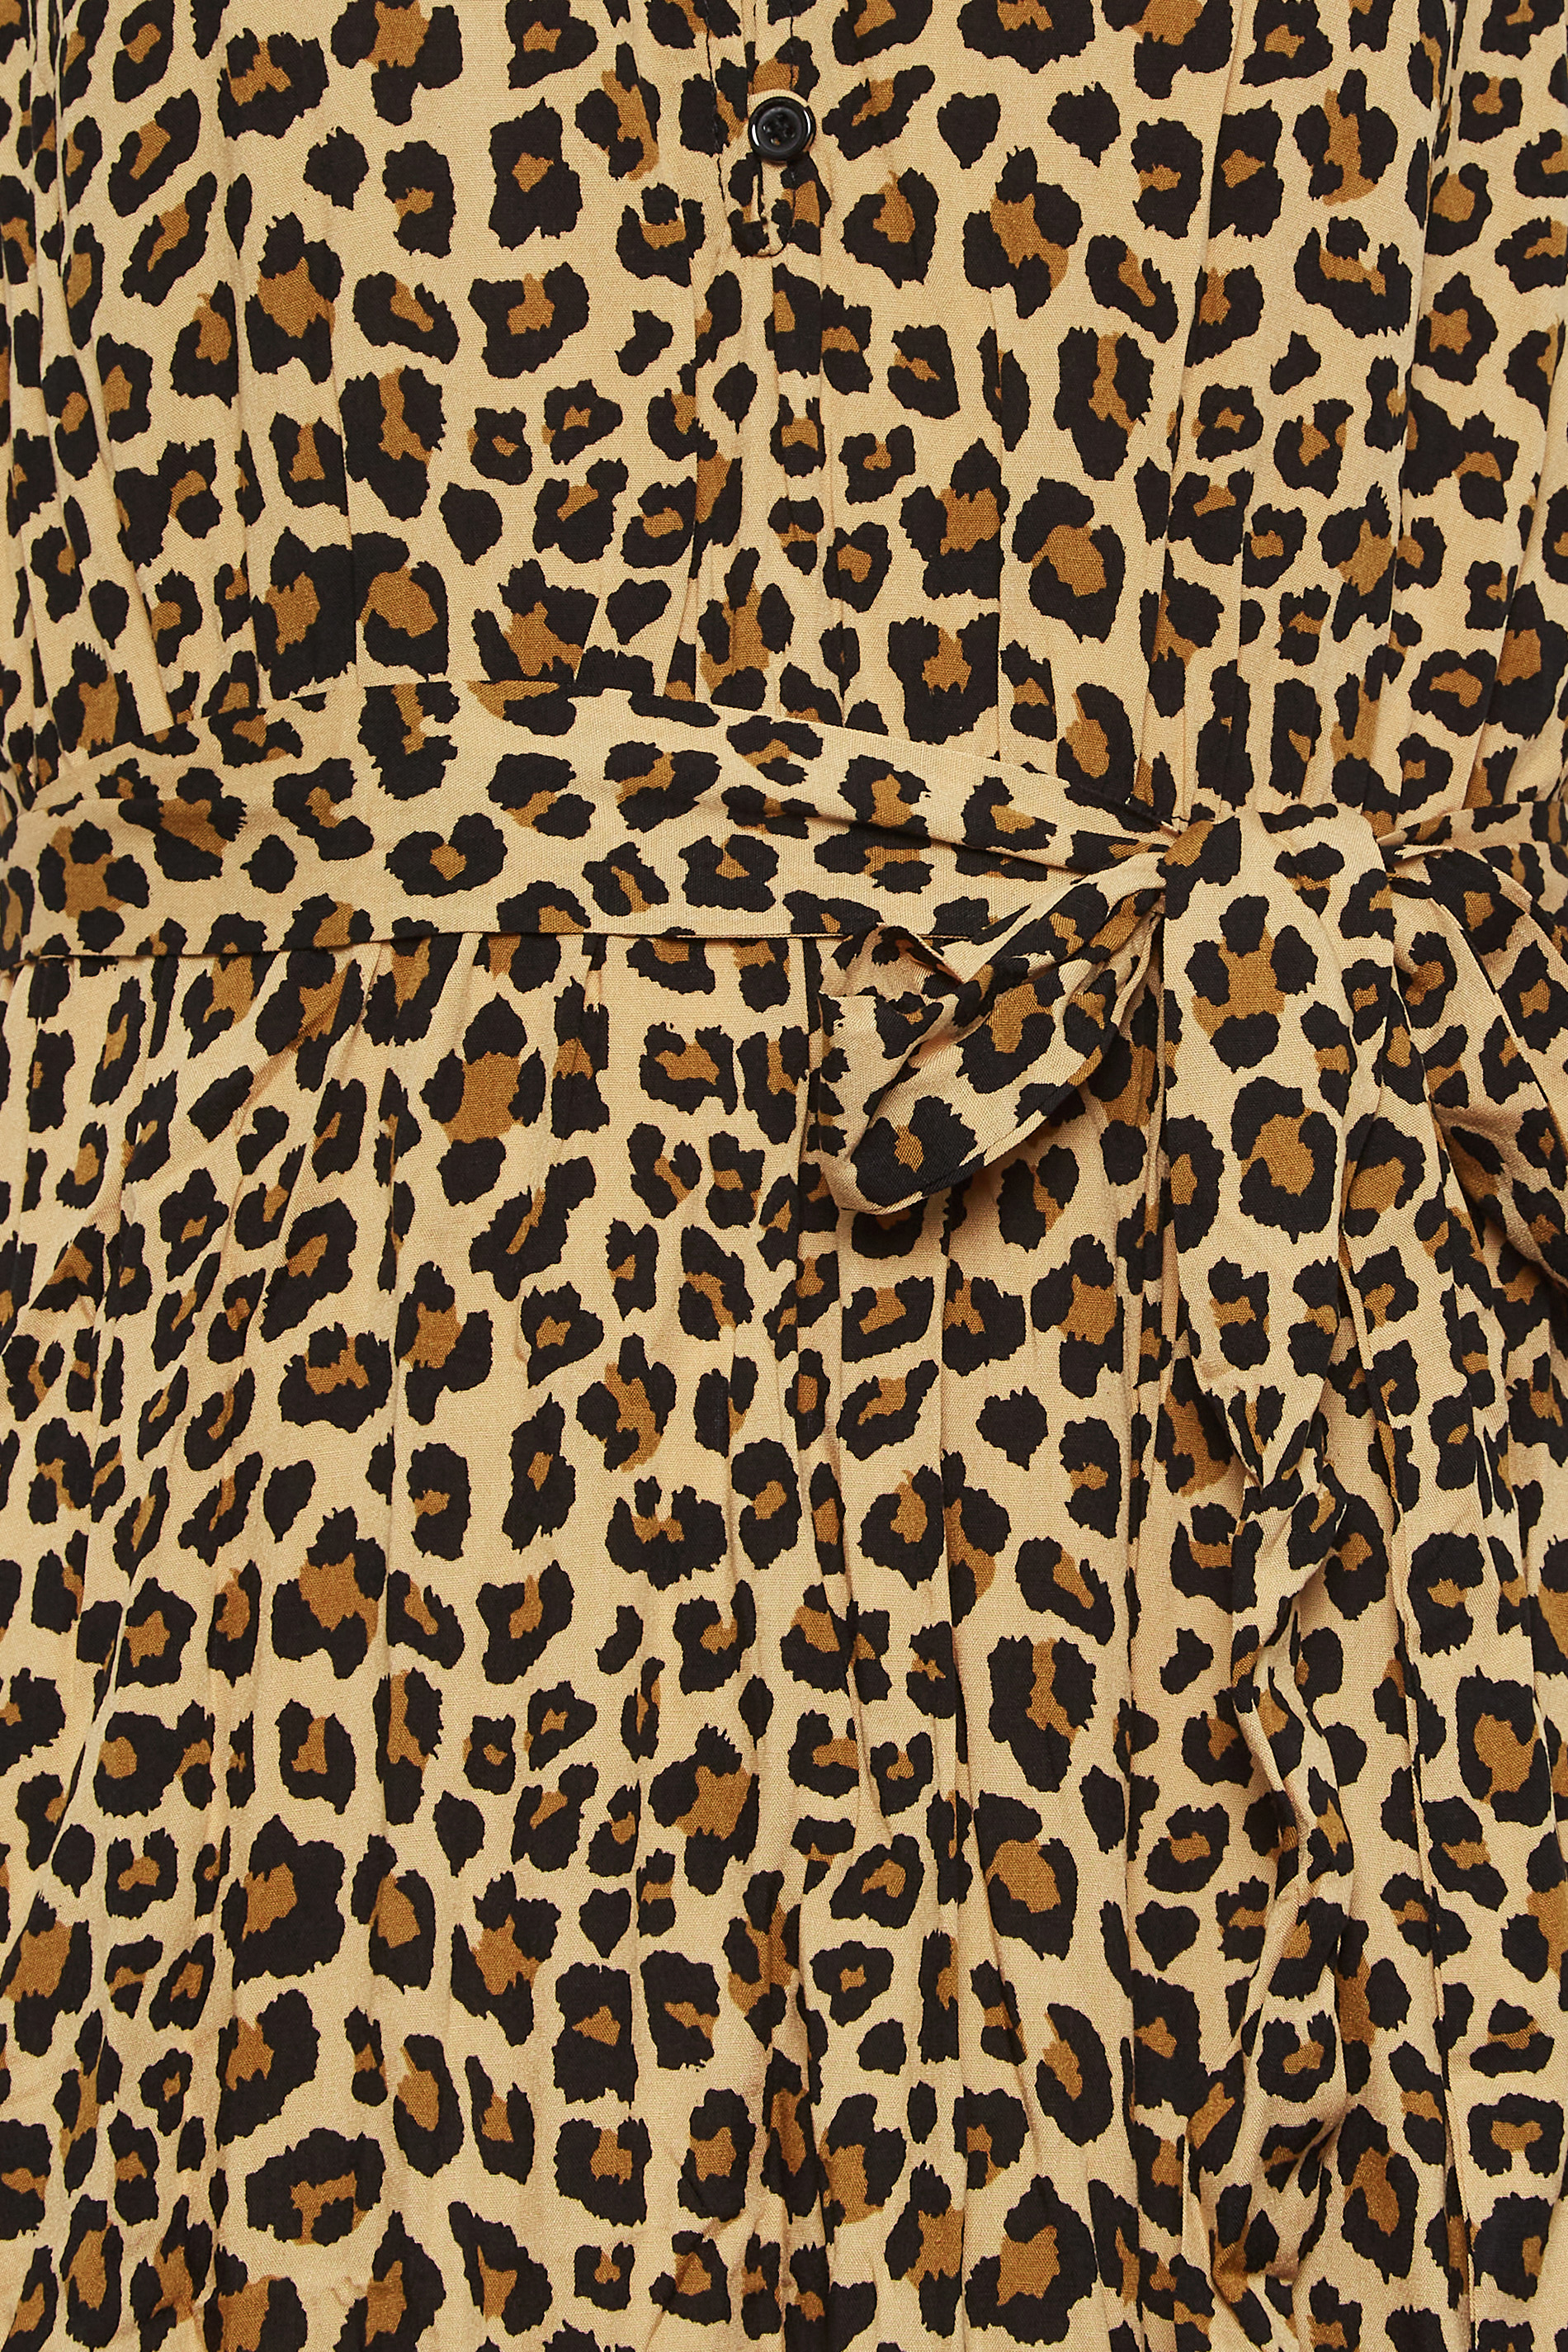 LTS Tall Women's Brown Animal Print Frill Sleeve Maxi Dress | Long Tall Sally 1